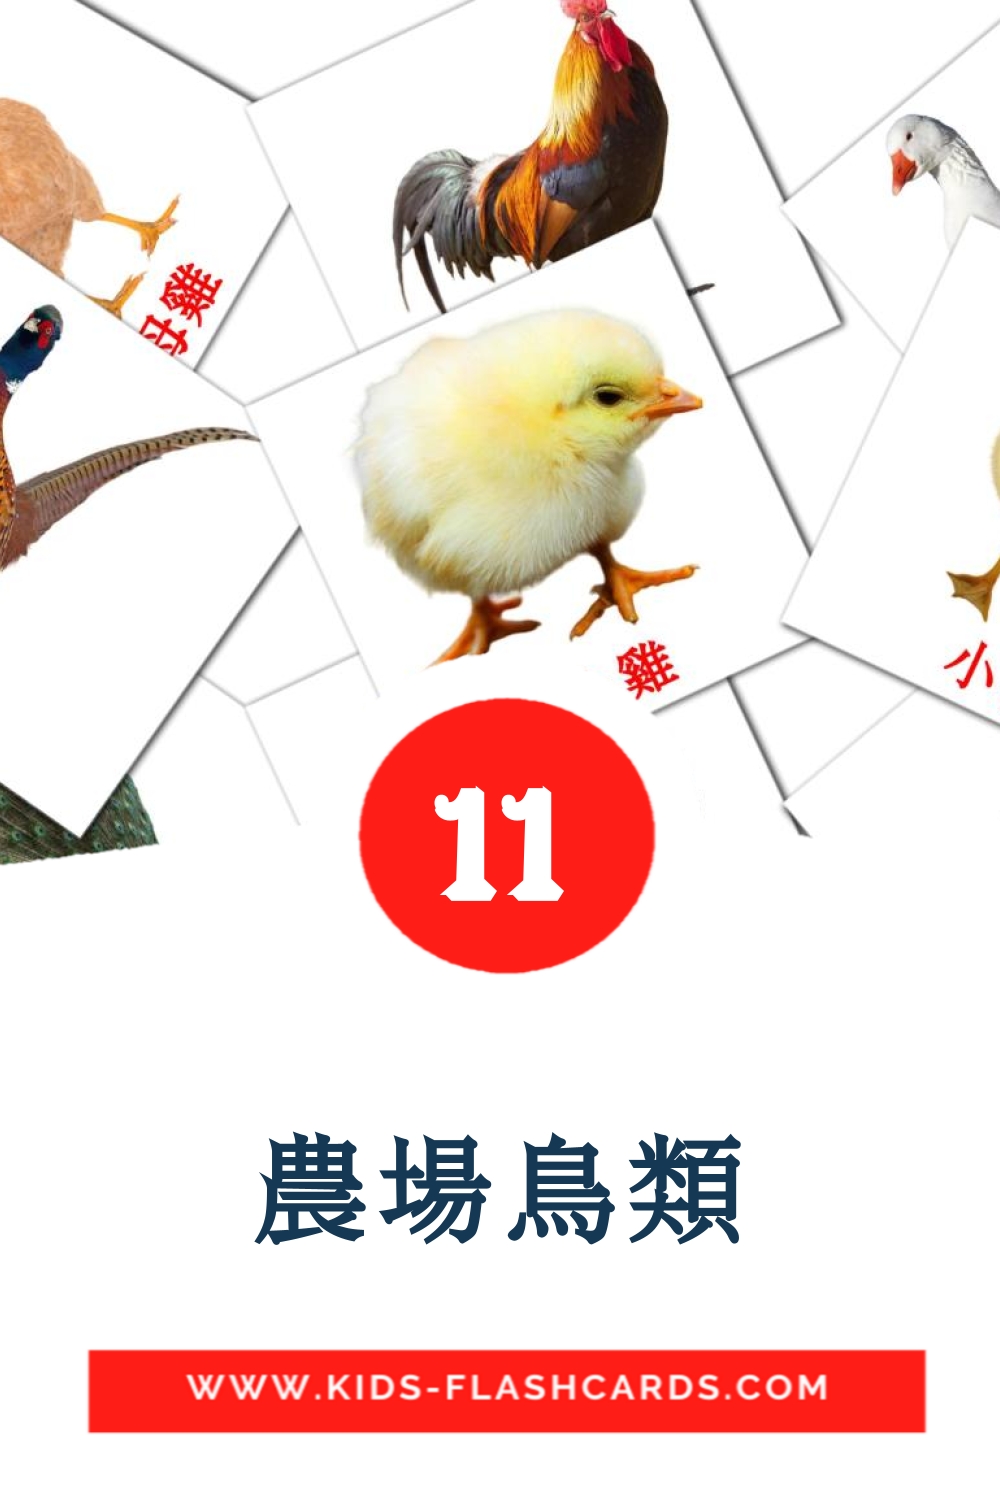 11 農場鳥類 Bildkarten für den Kindergarten auf Chinesisch(Traditionell)